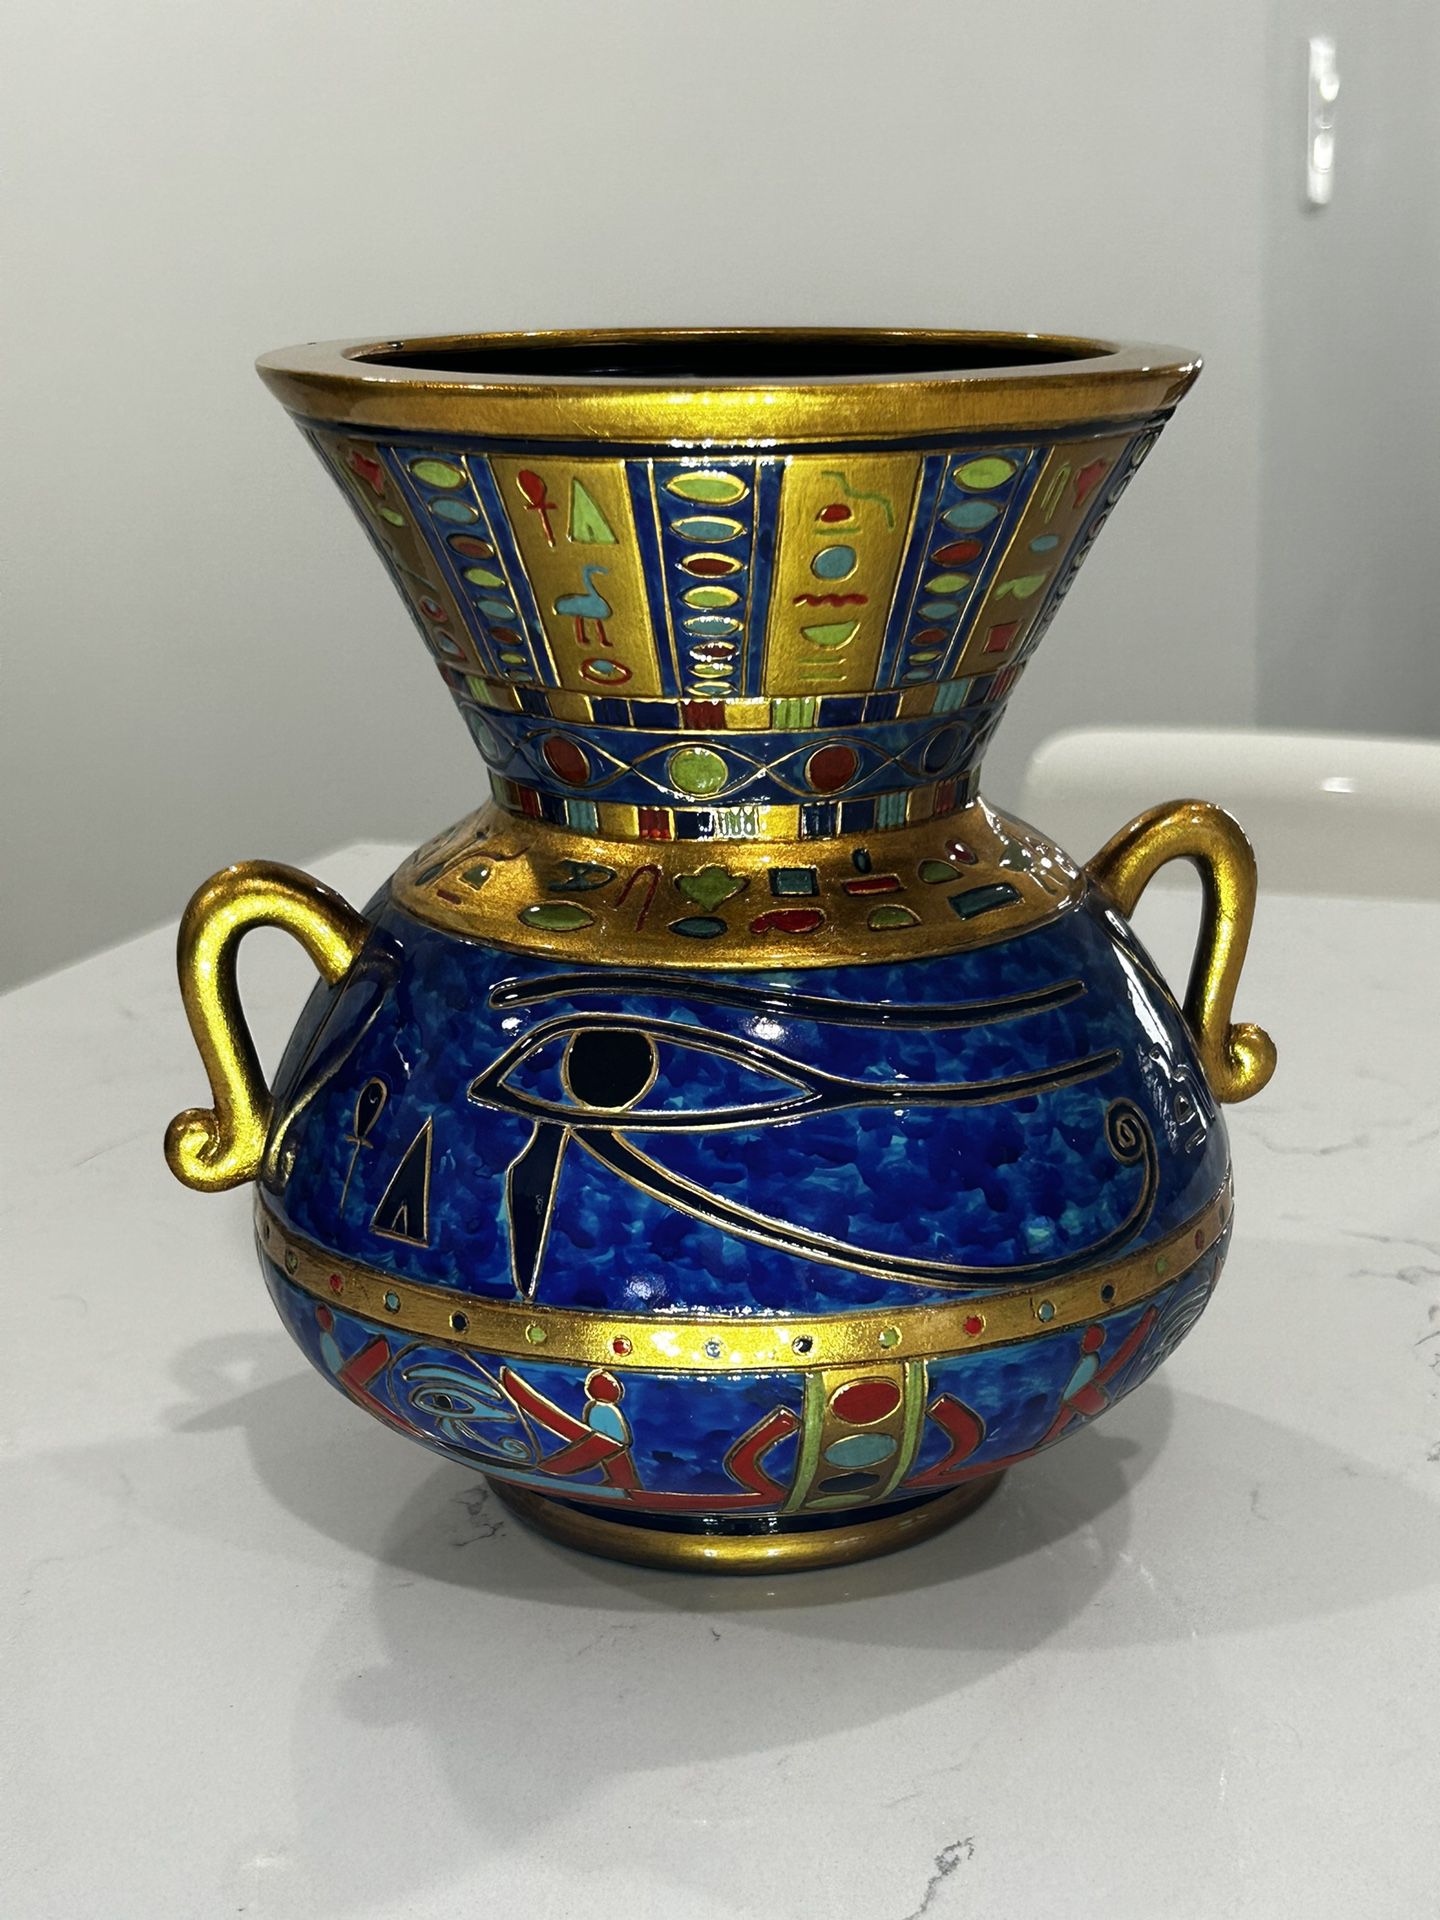 Veronese Vase 2002 Summit Collection Egyptian Design Gold 8.5" Vintage